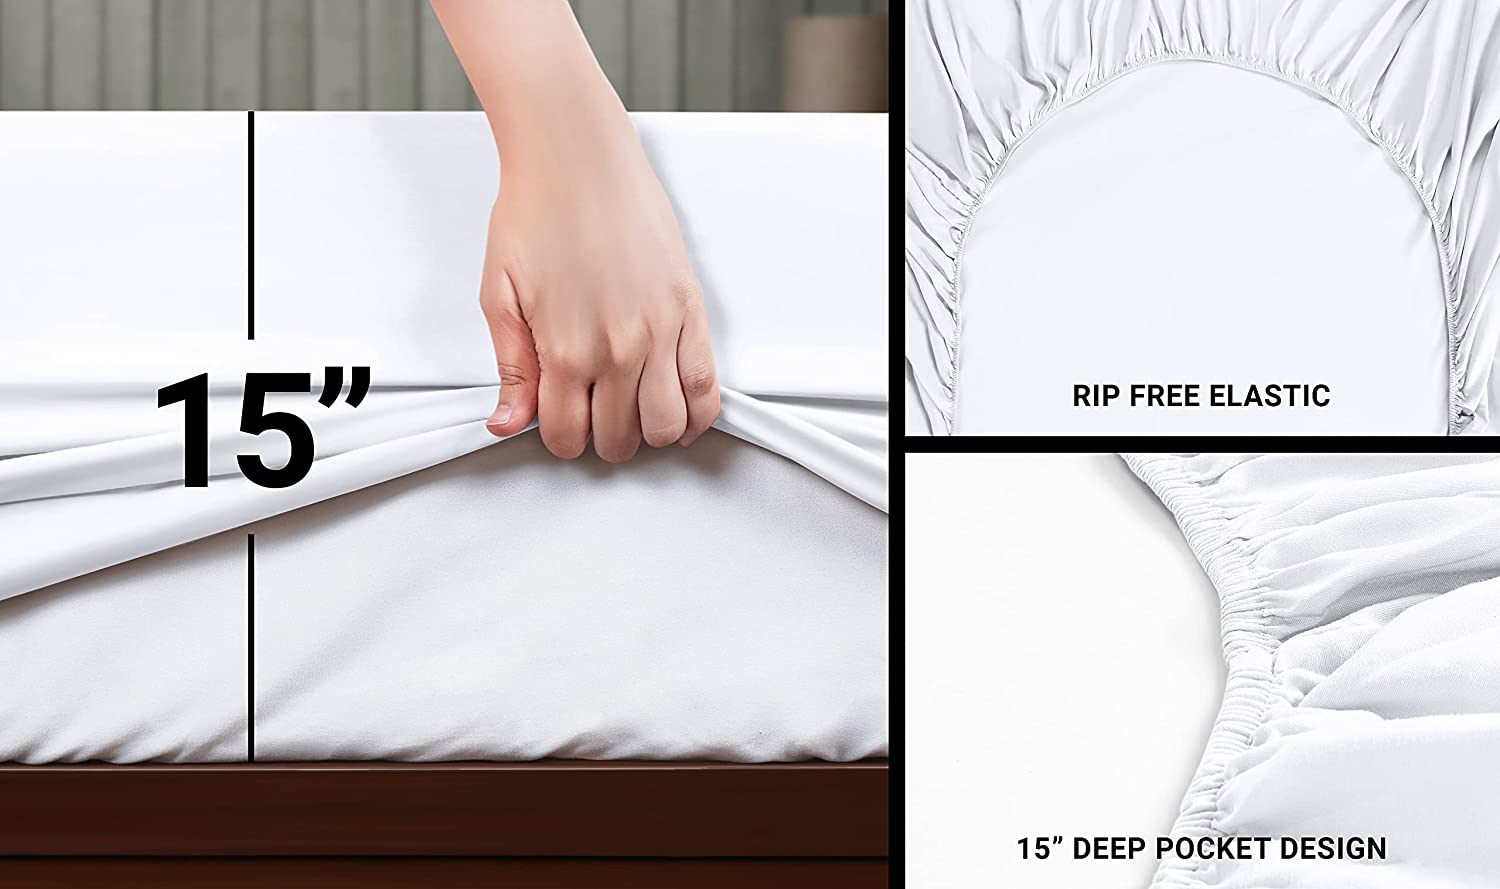 Buy Utopia Bedding Flat Sheet Brushed Microfiber $4.94 Piece